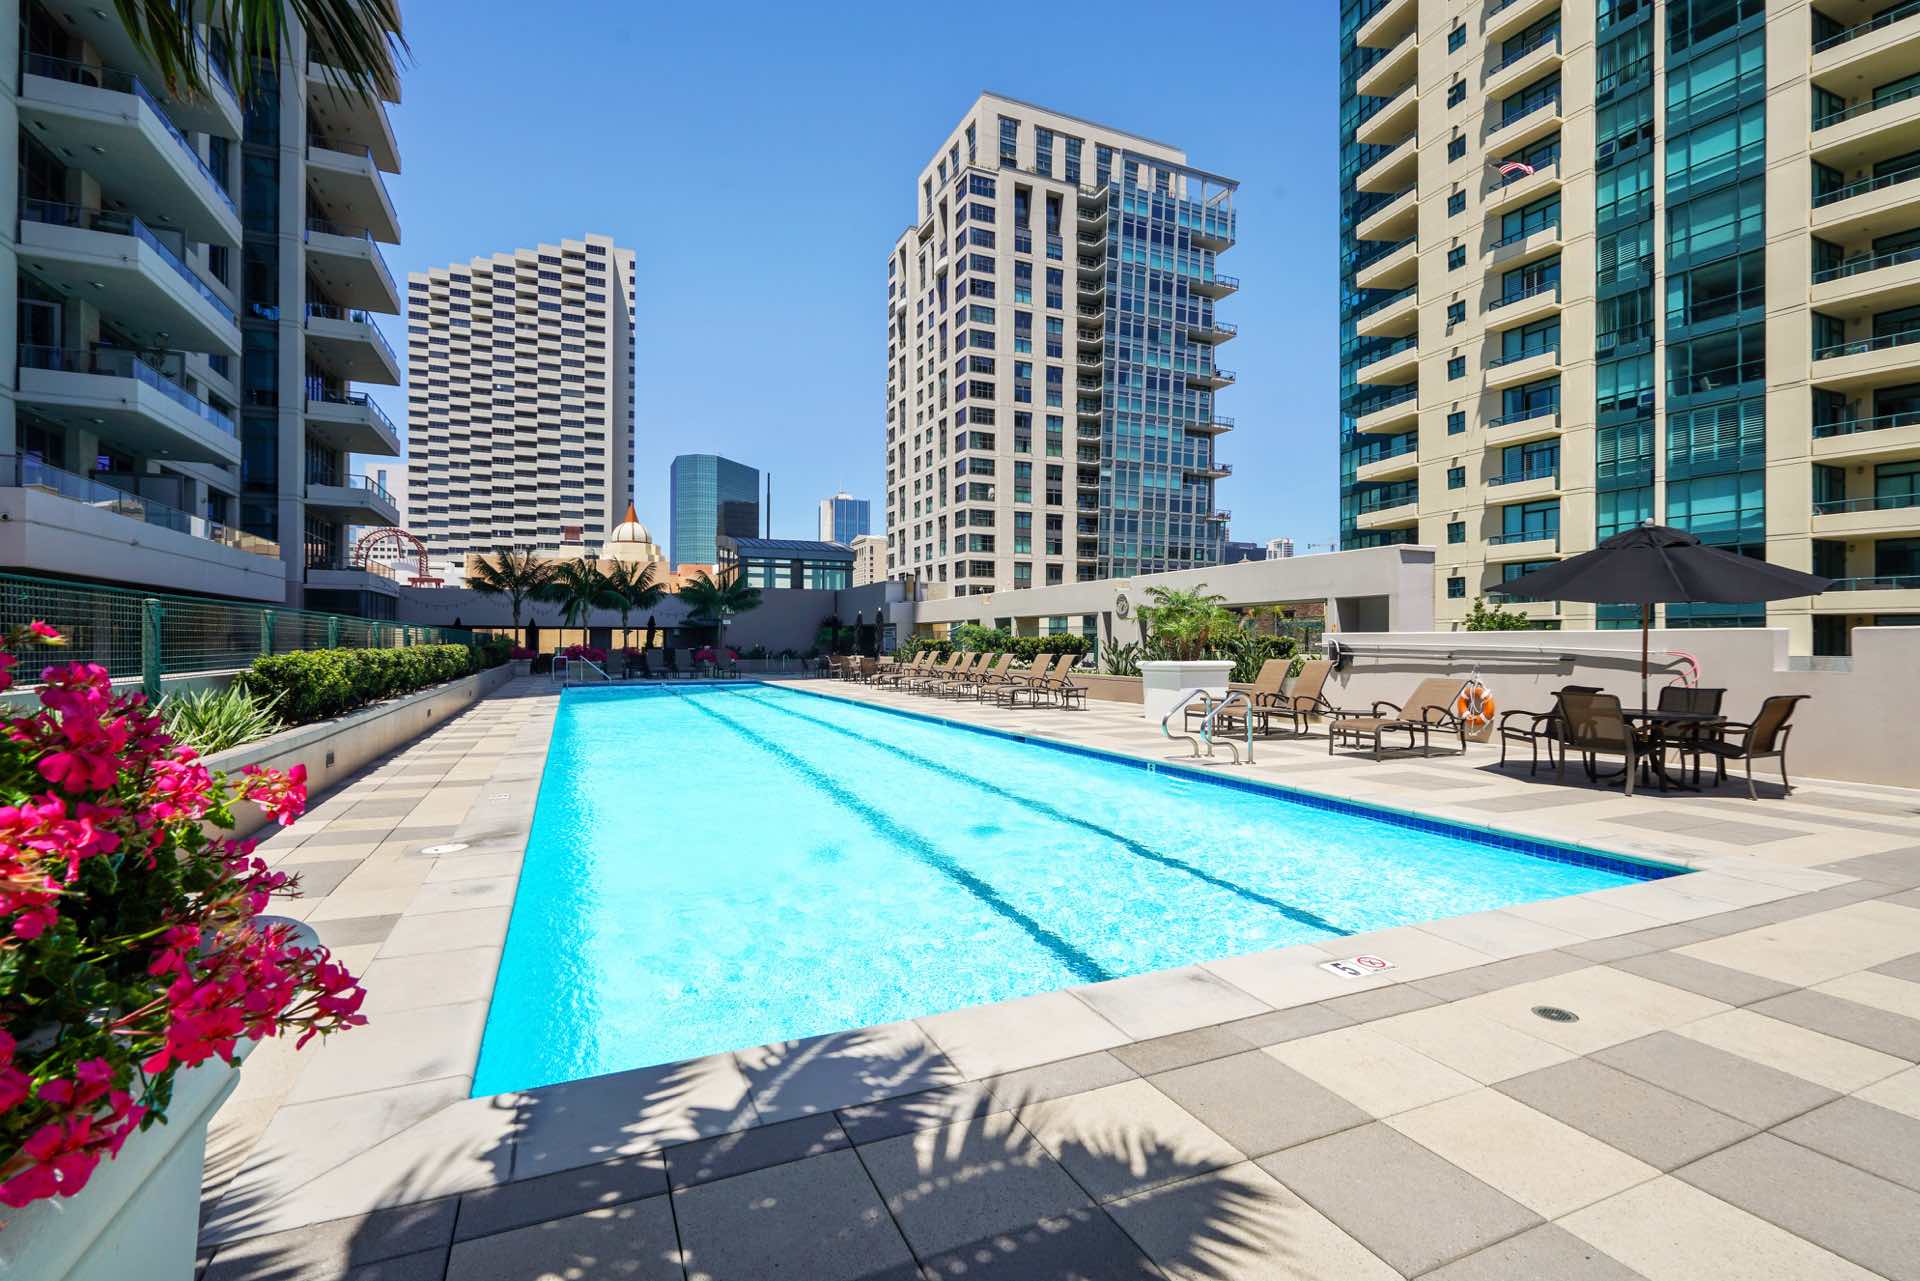 Lap pool in San Diego Marina District condo building